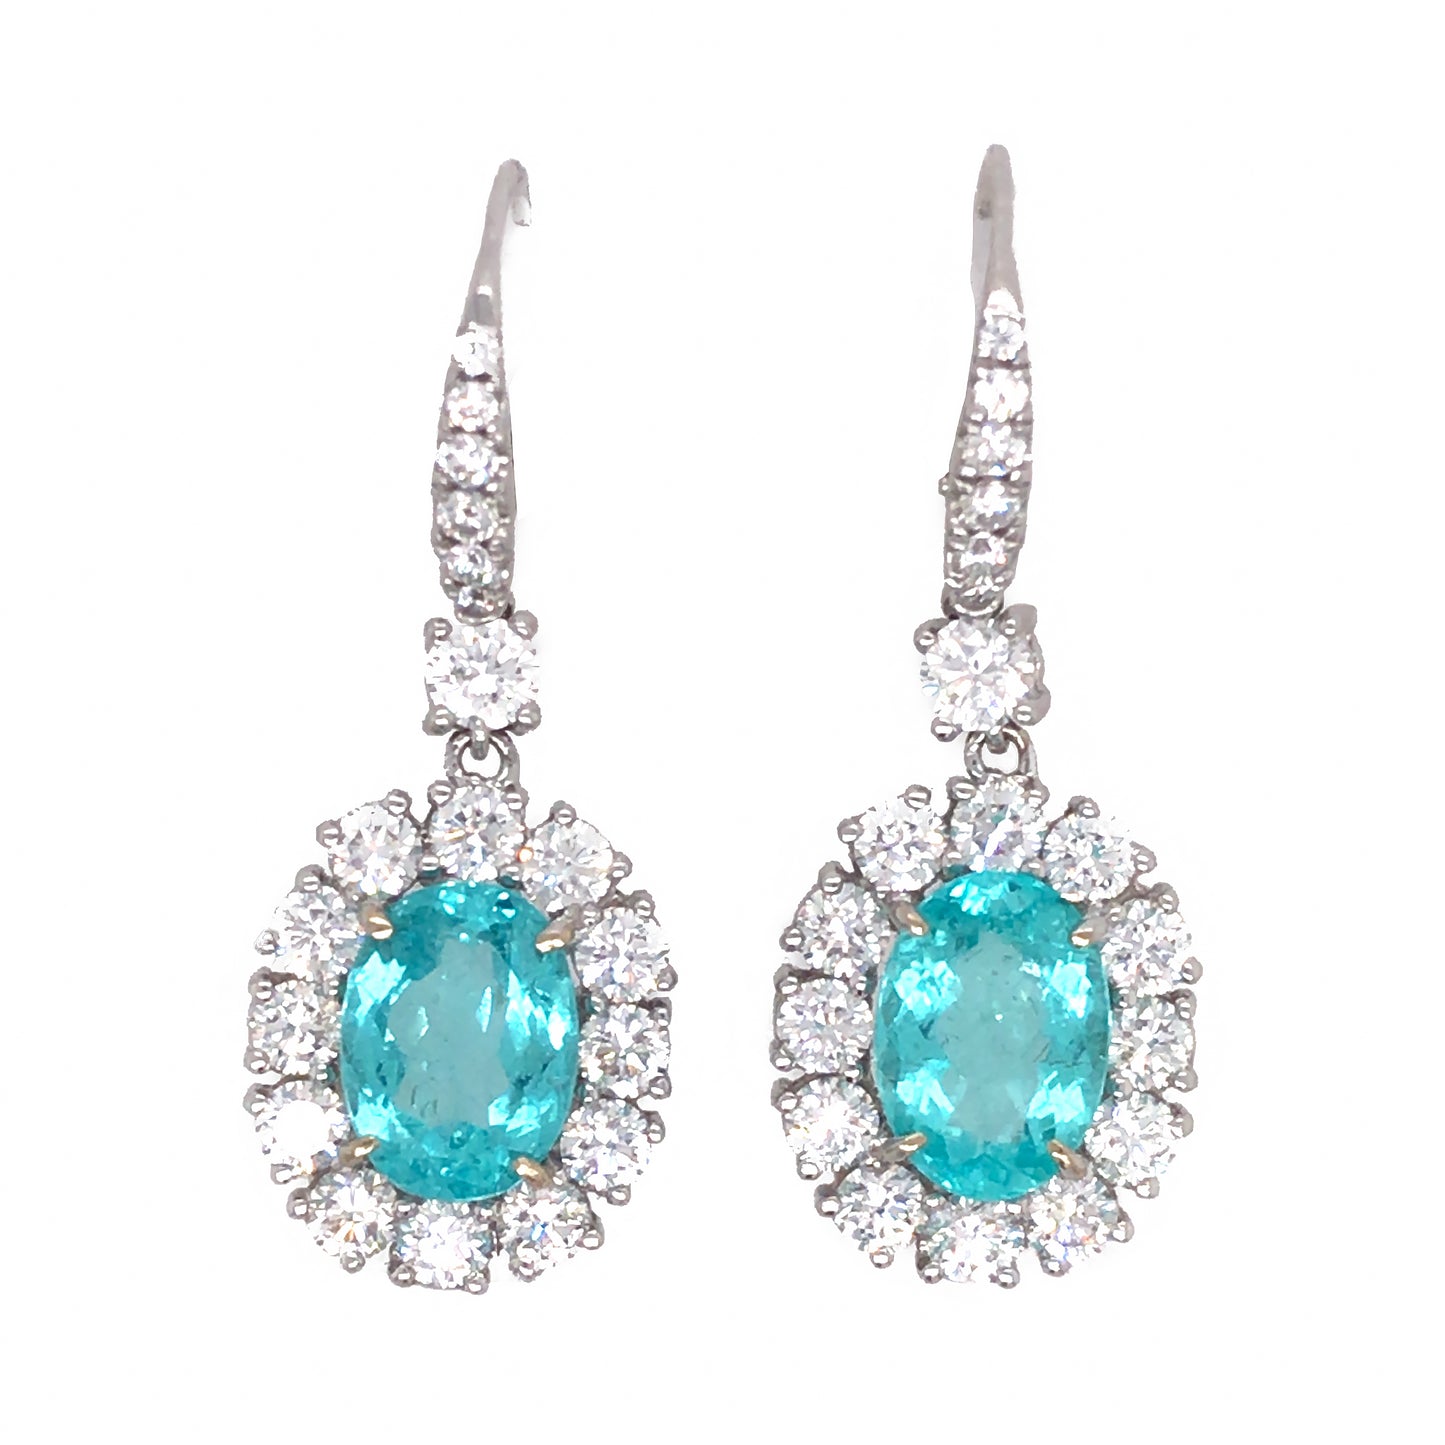 Certified Rare Blue Paraiba and Diamond Earrings